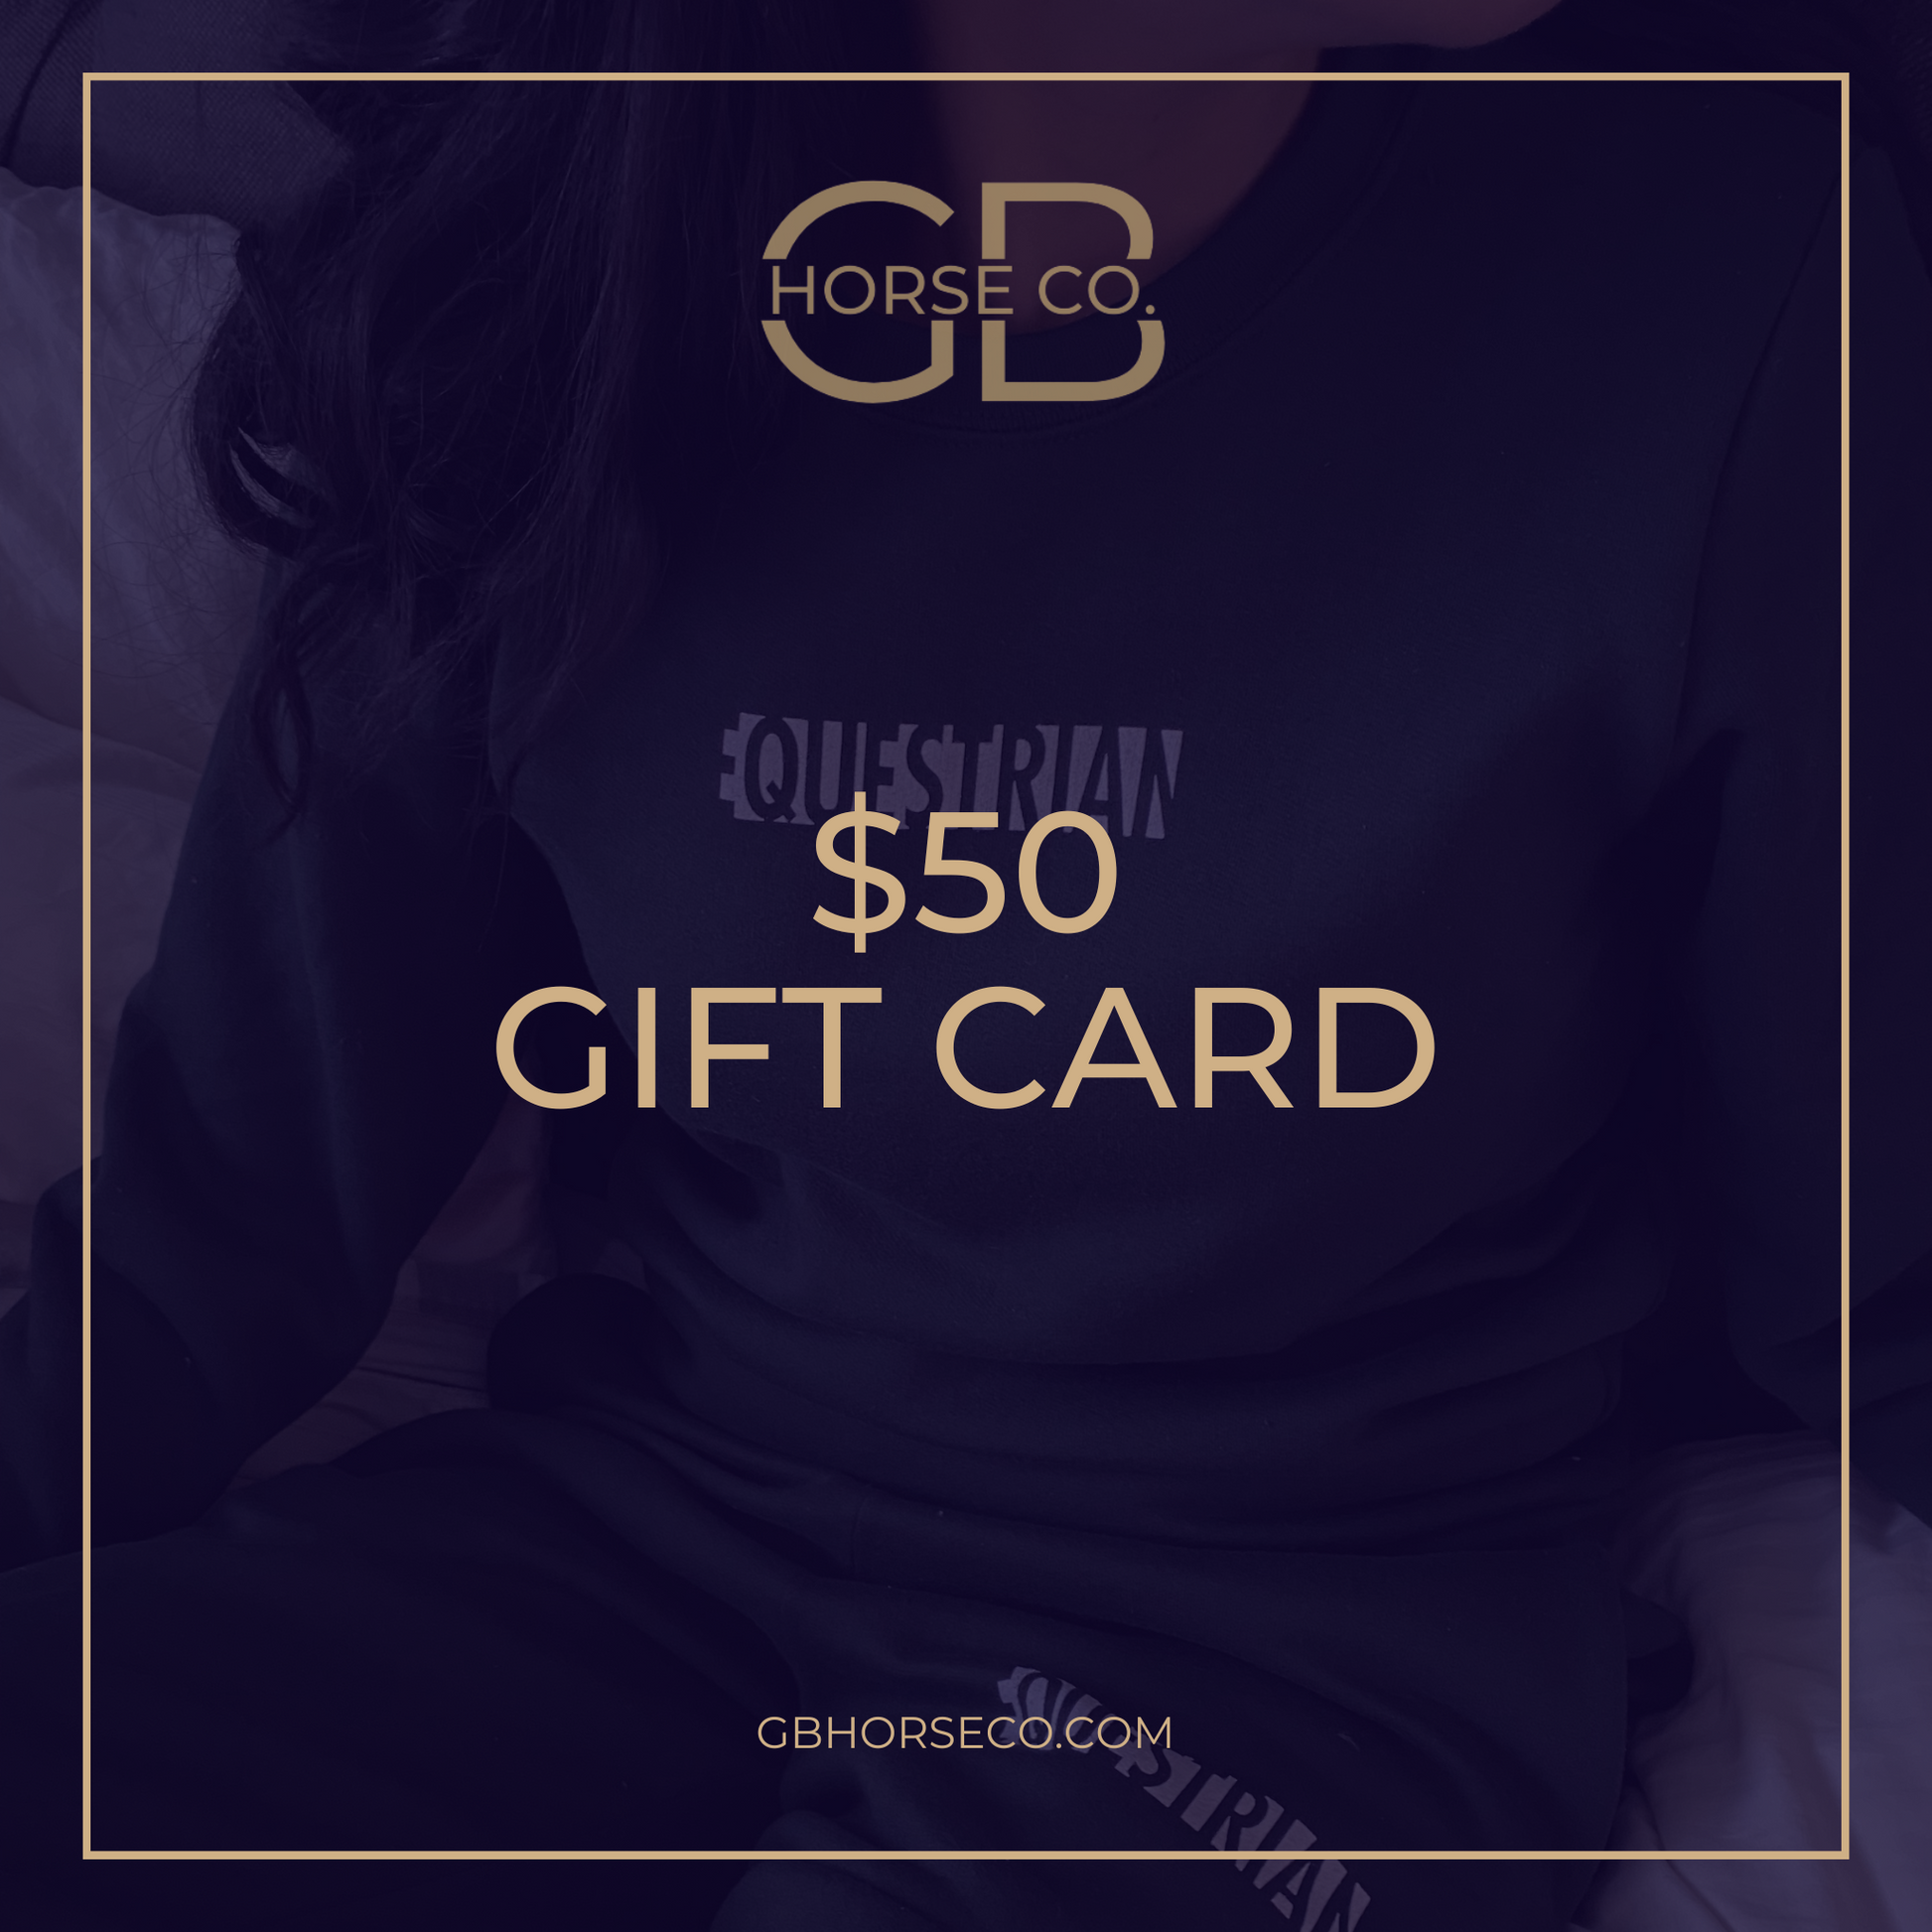 Gift Card - Gray & Bay Horse Co.